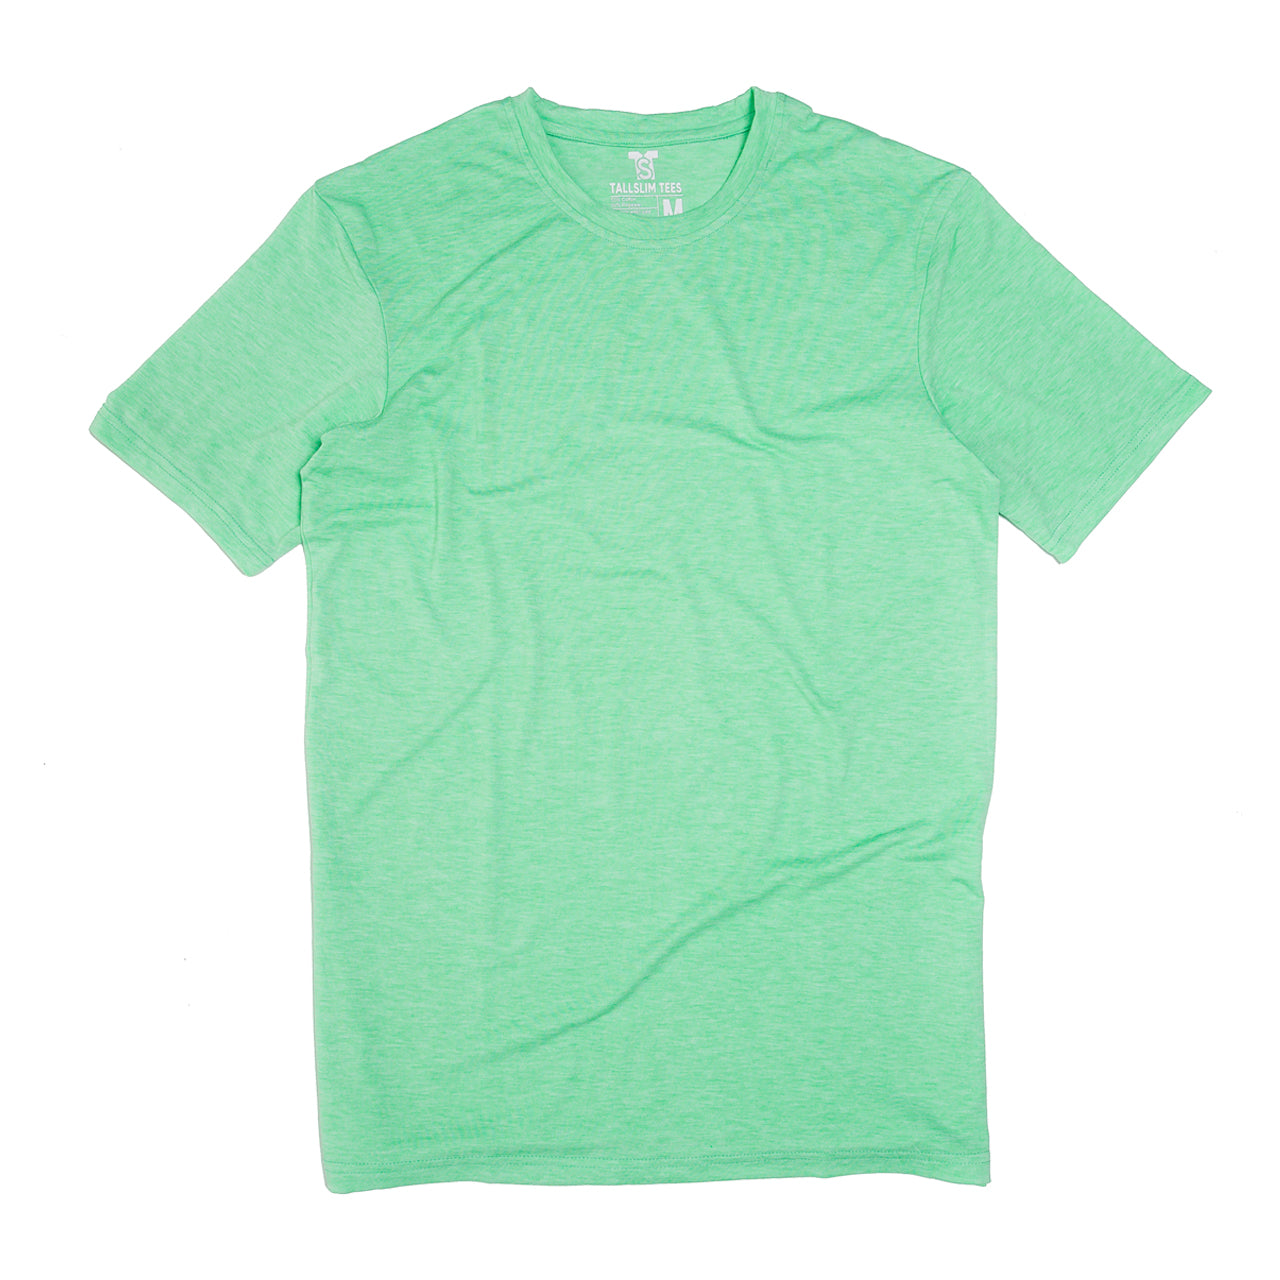 Green Crew Neck Shirt for Tall Slim Men